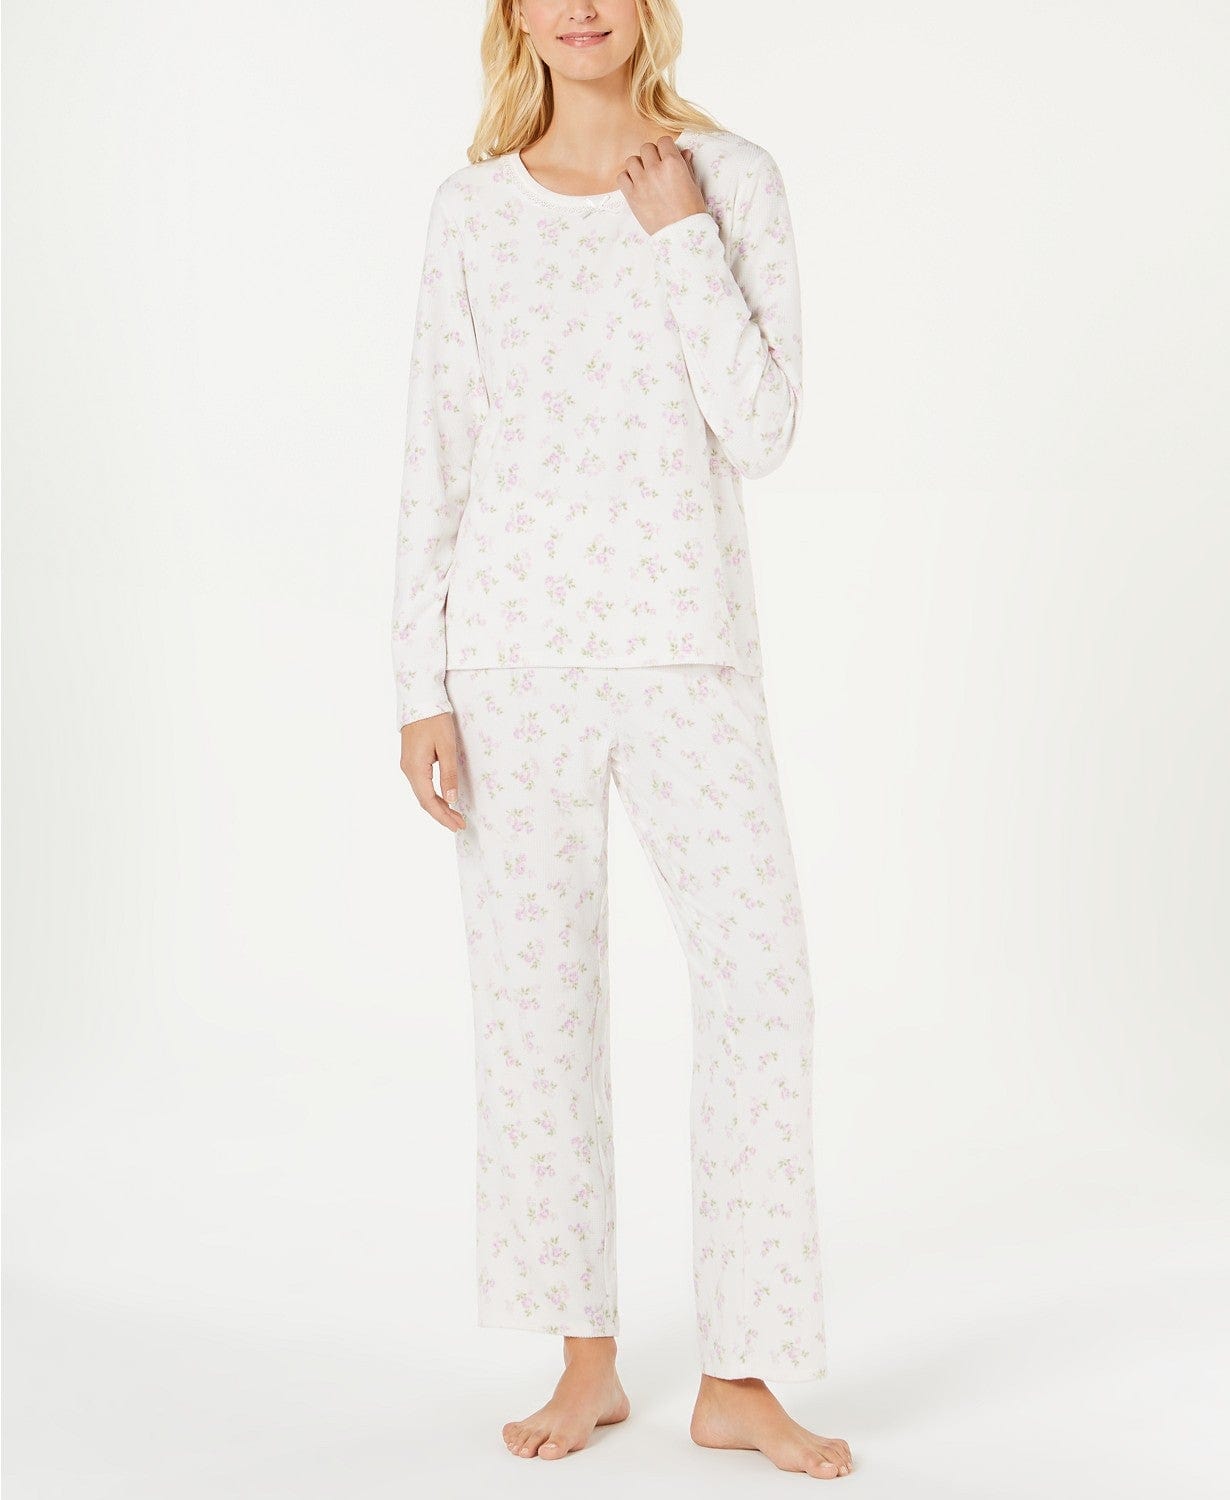 CHARTER CLUB Womens Bottoms XL Printed Thermal Fleece Pajama Set - 2 Pieces